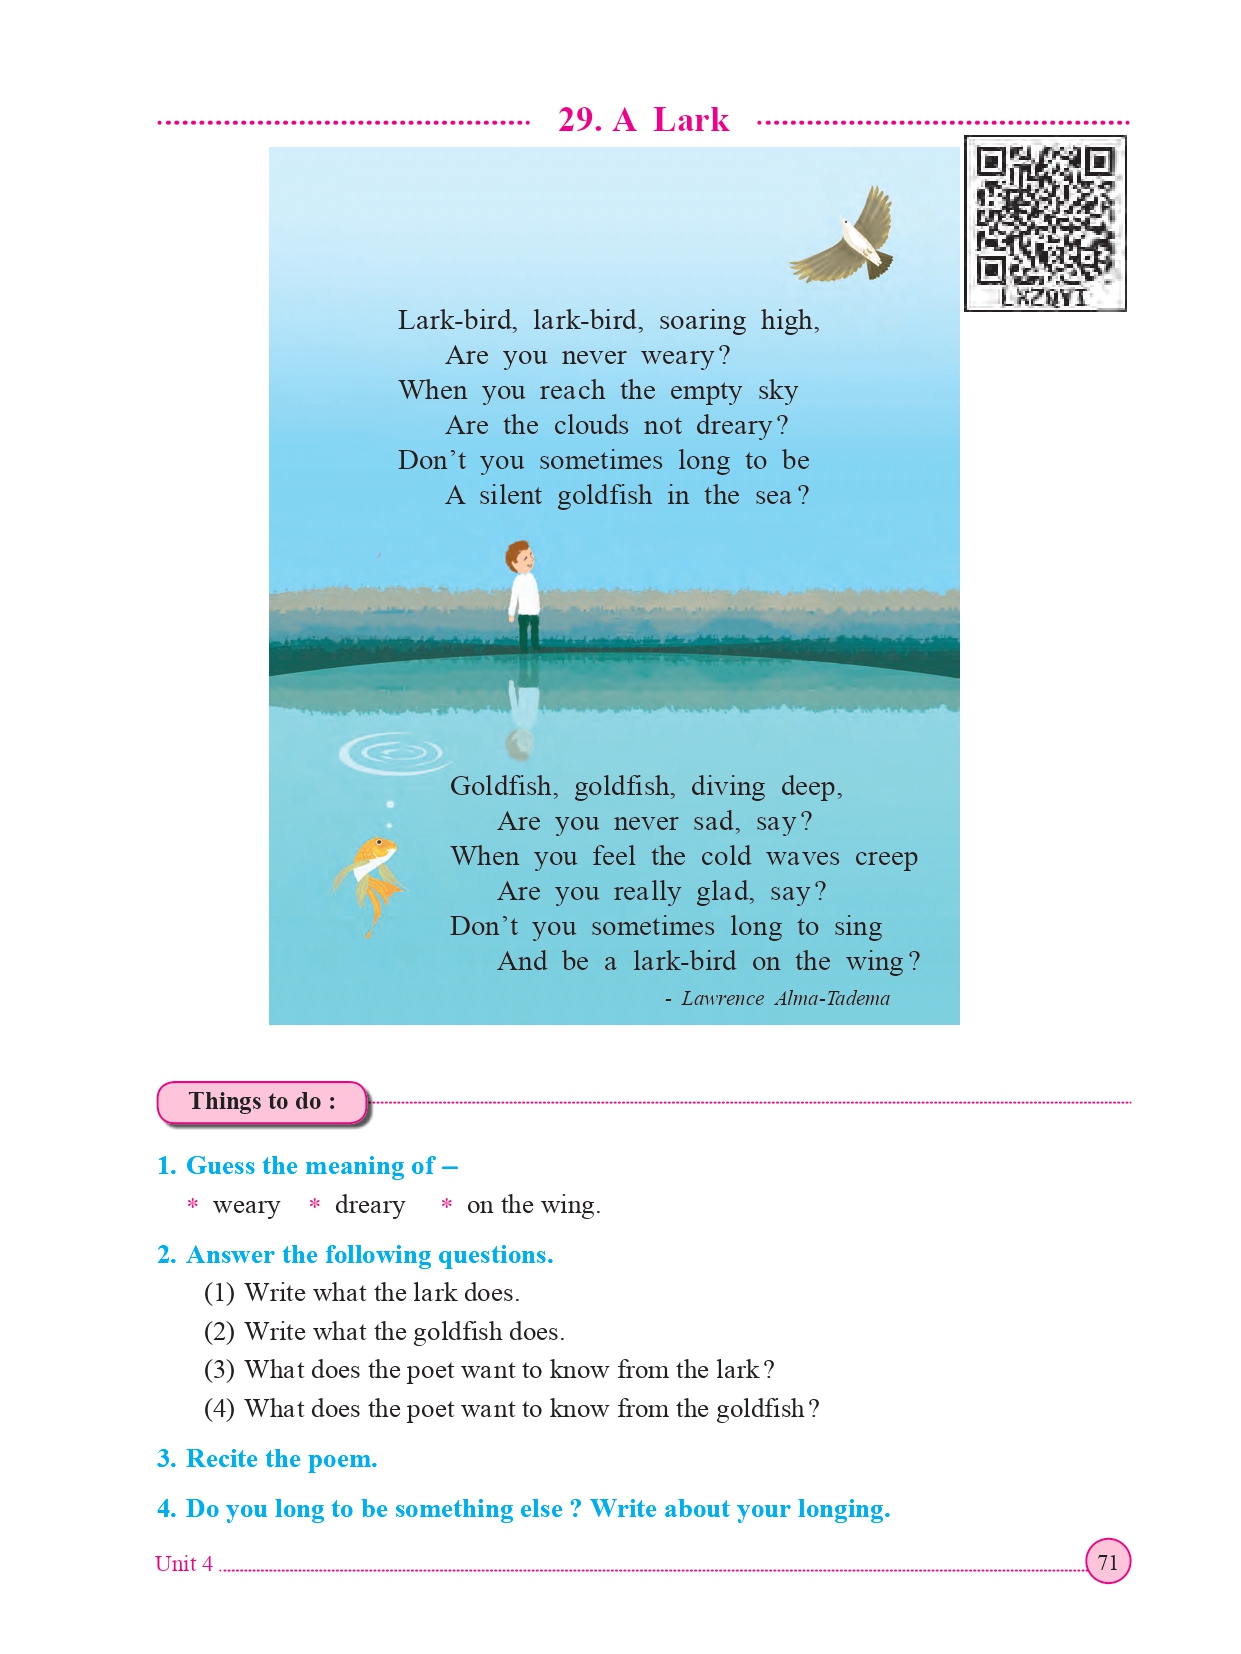 Maharashtra Board 5th Standard English Book PDF 